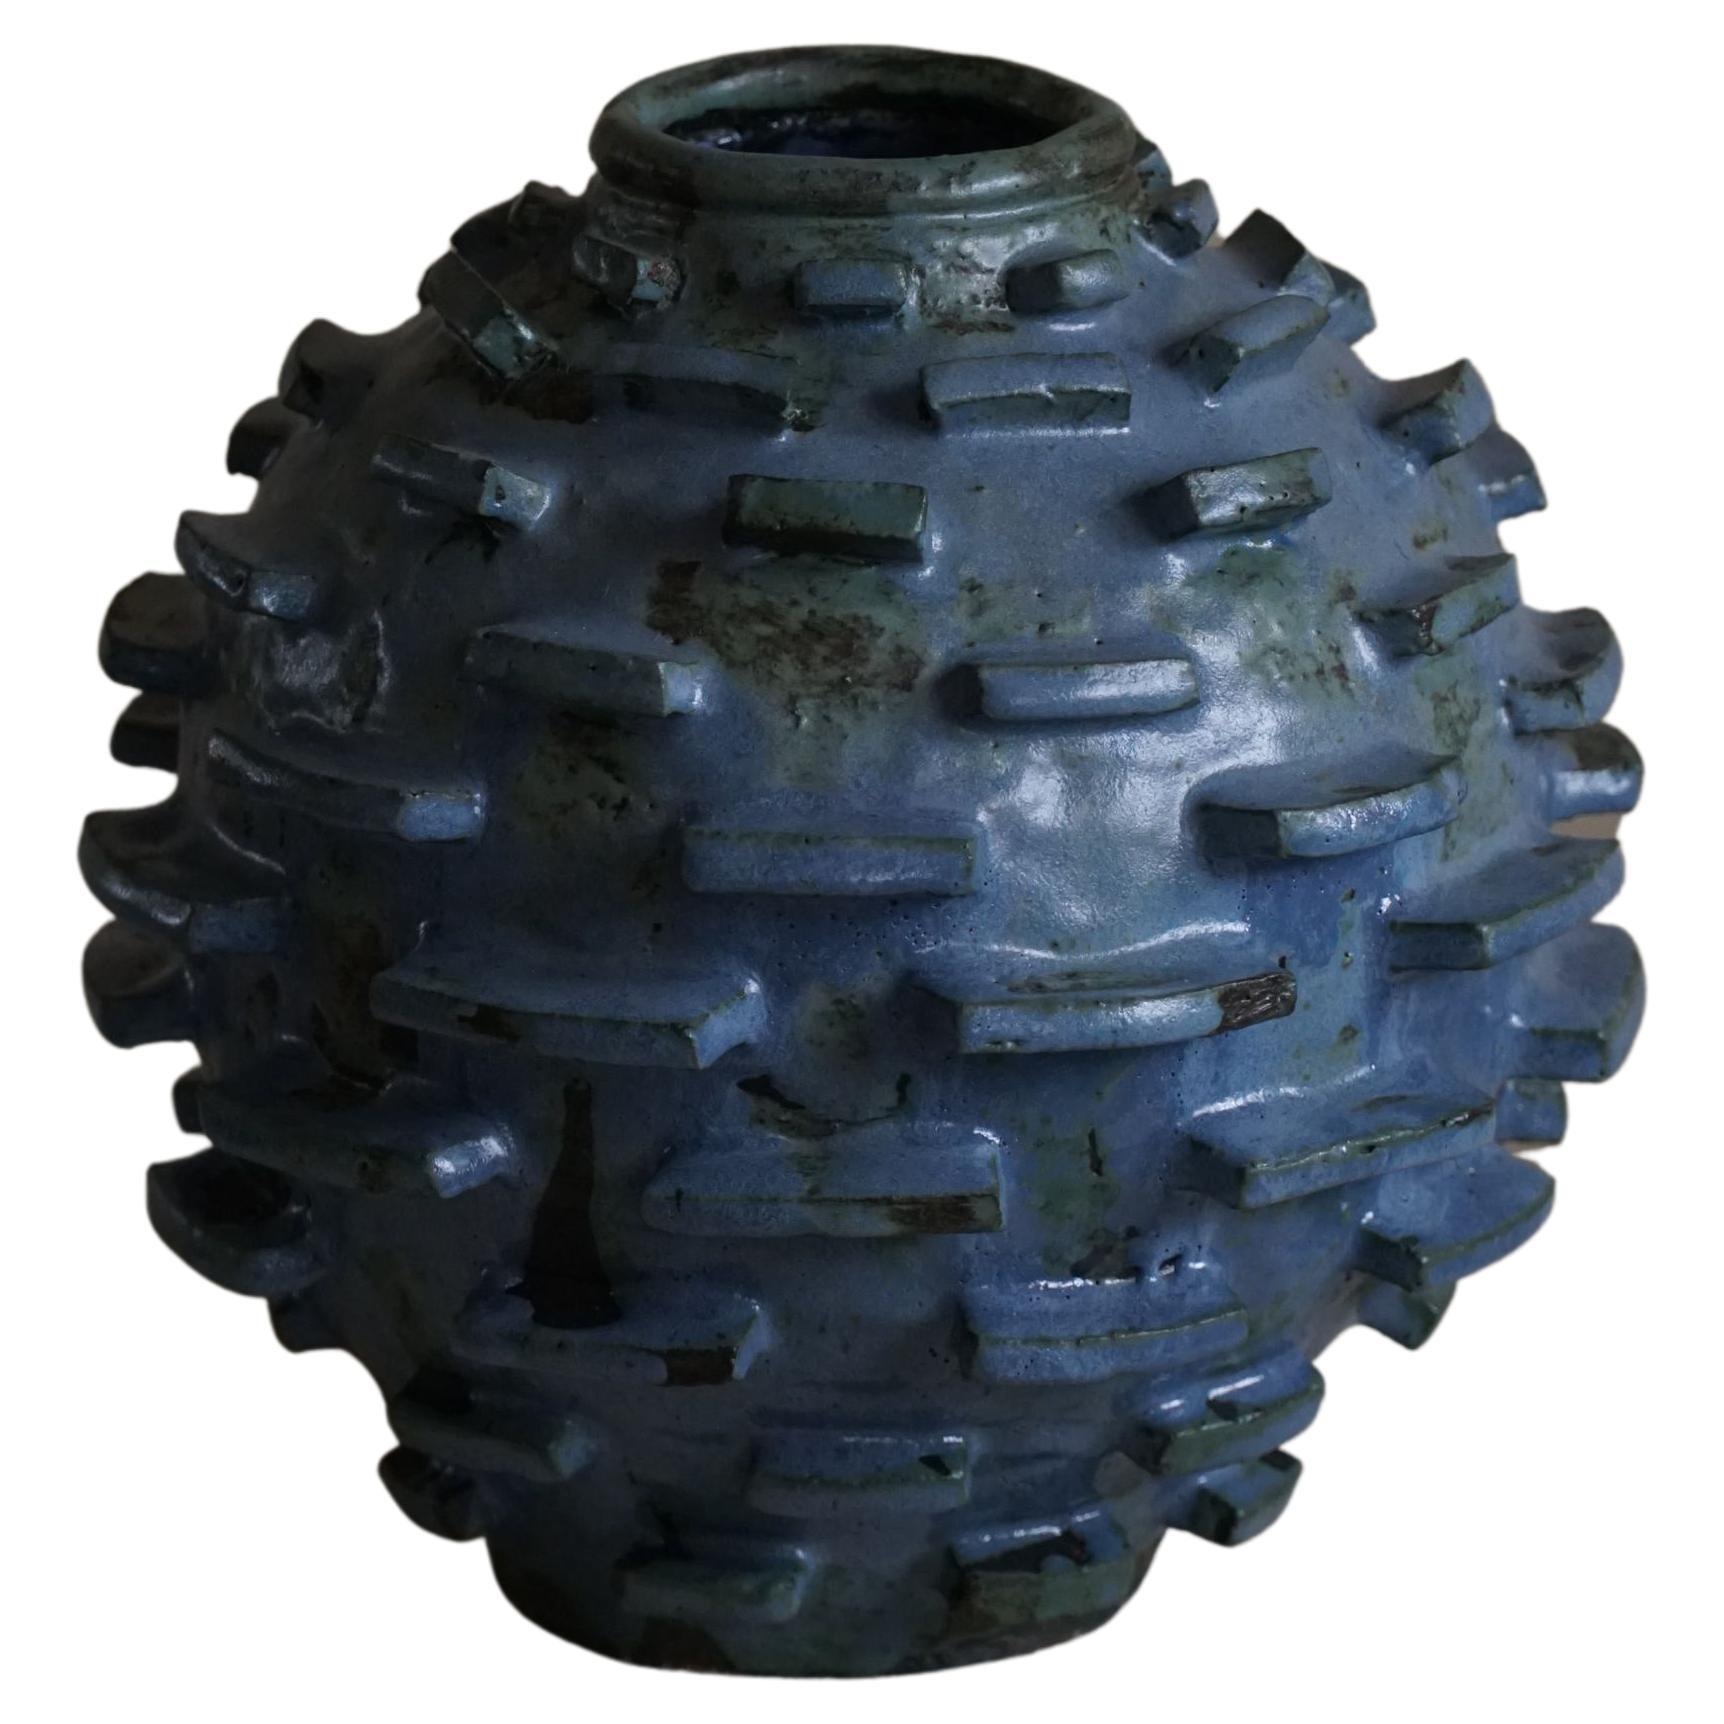 Ceramic, Stoneware Vase in Blue / Green Glaze by Danish Artist Ole Victor, 2021